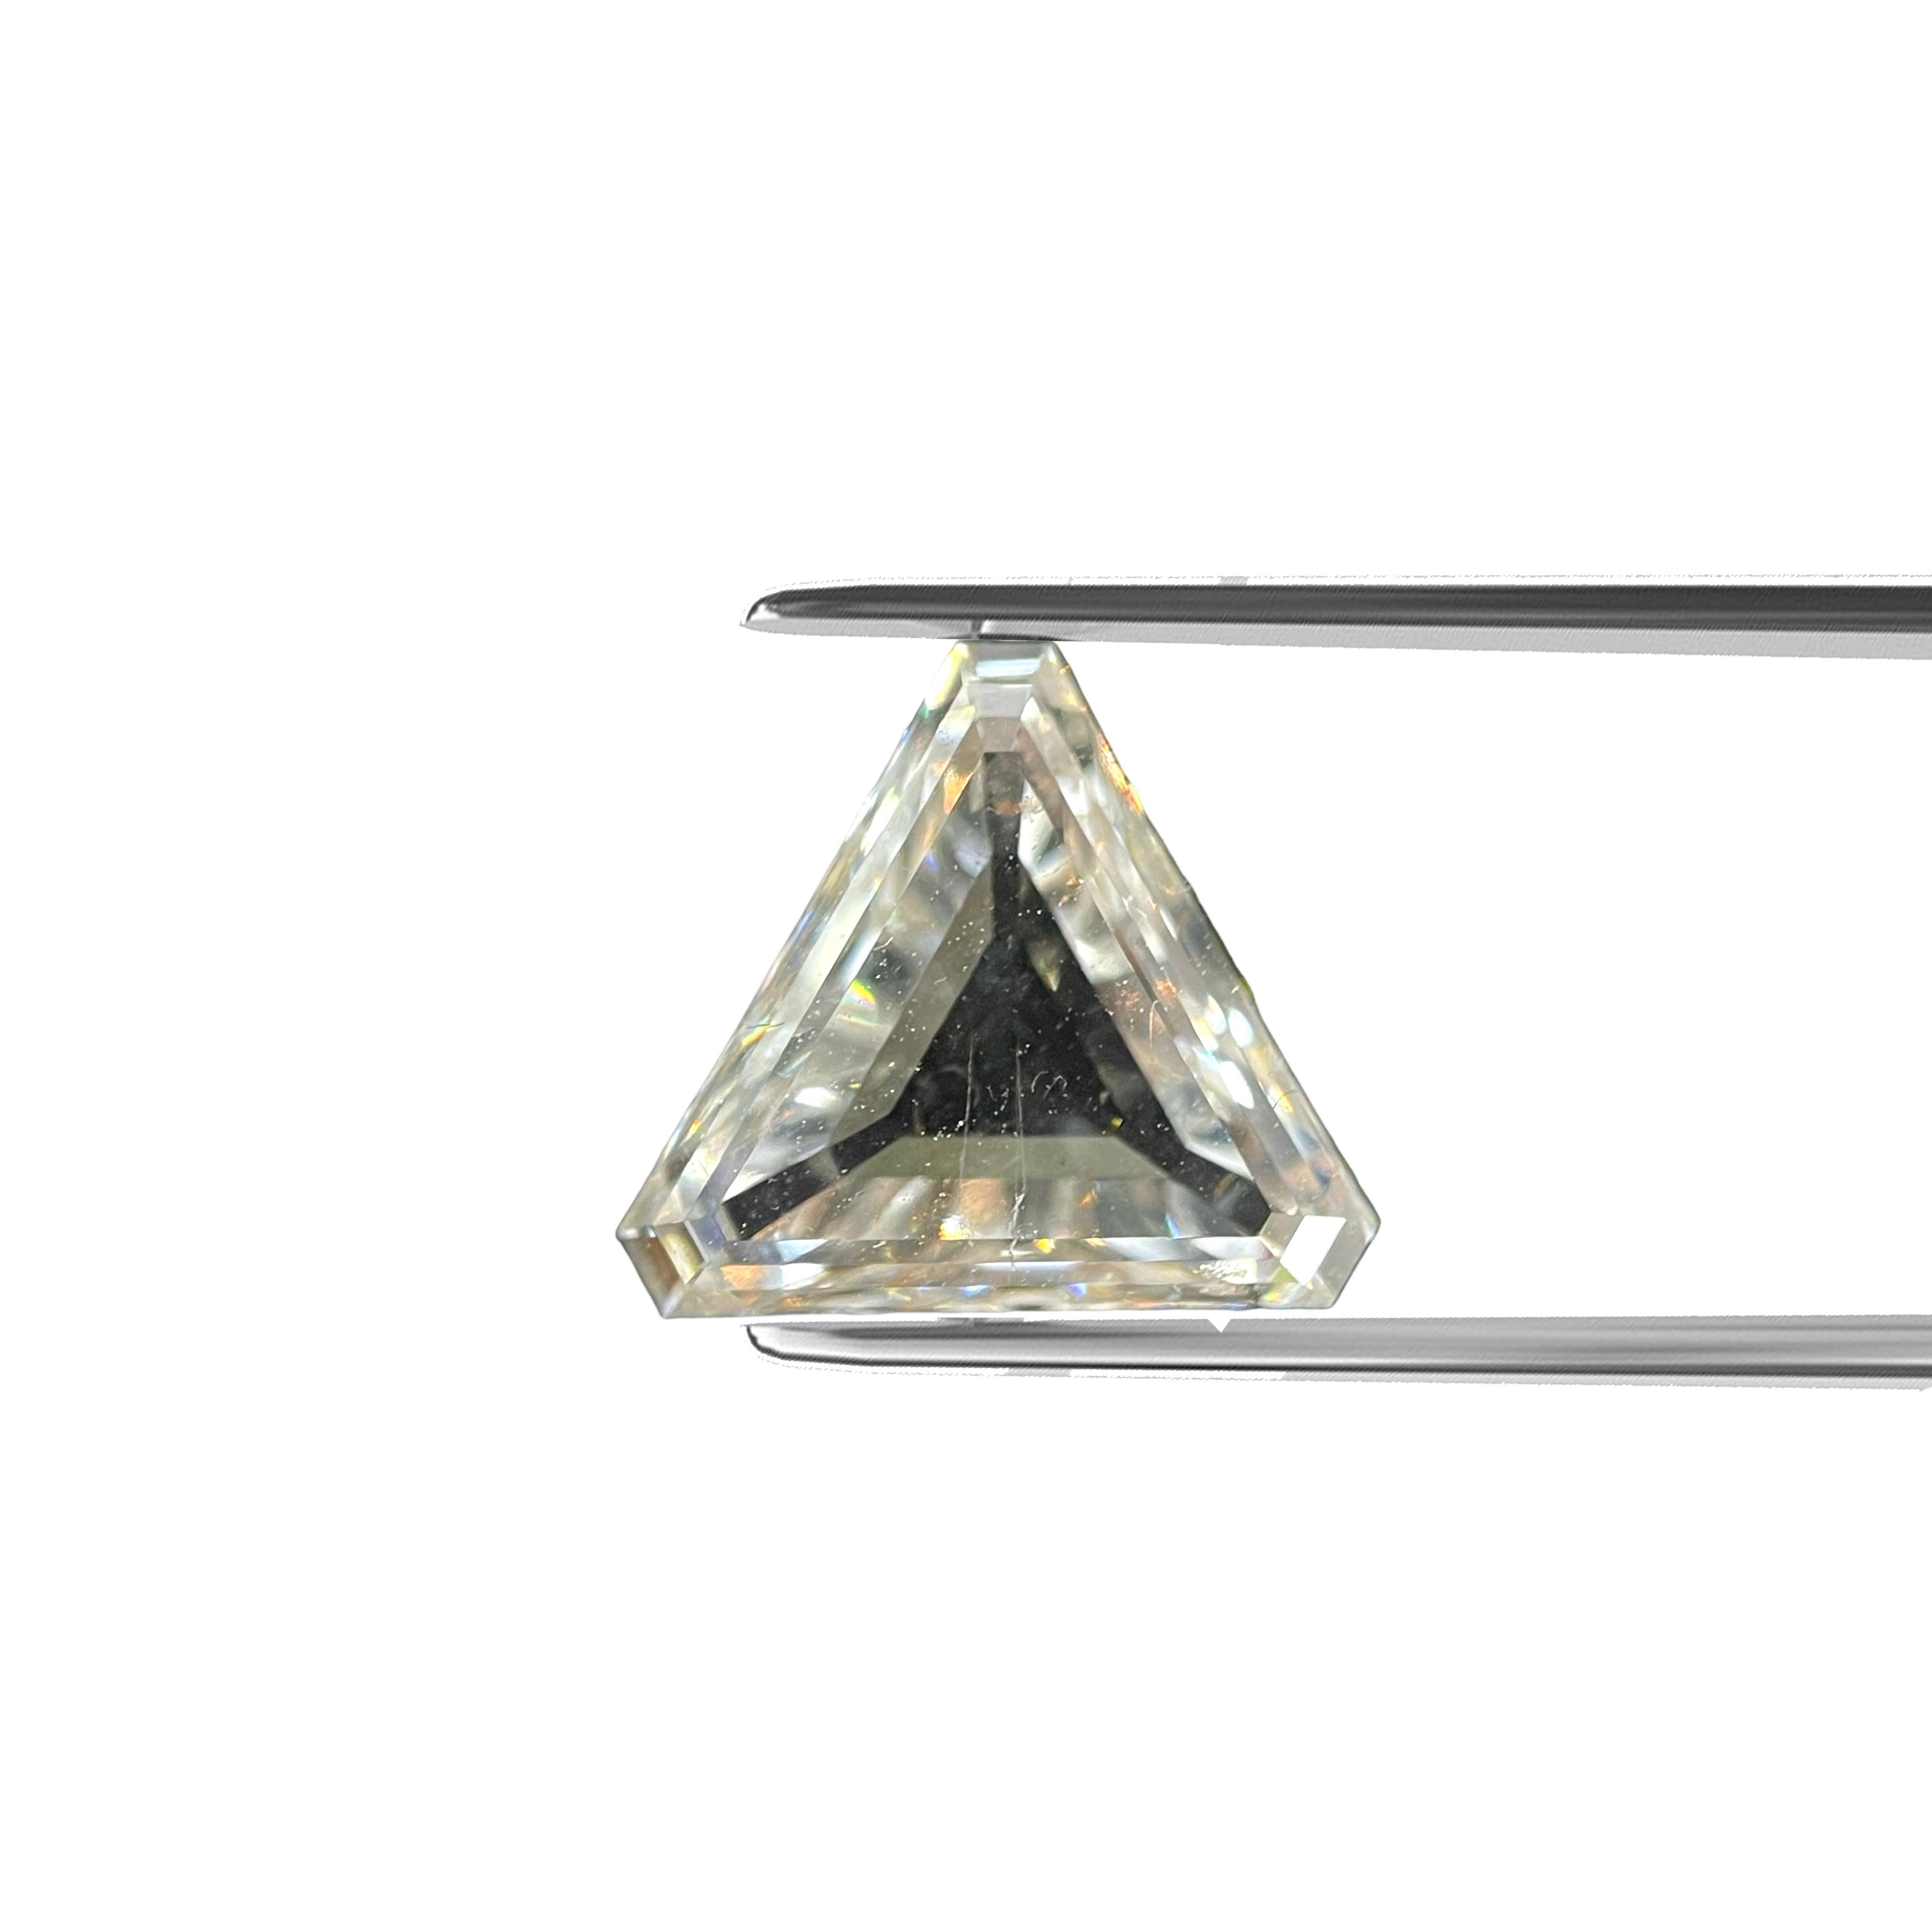 ITEM DESCRIPTION

ID #:NYC56244
Stone Shape:	CUT-CORENRED TRIANGULAR STEP
Diamond Weight:	1.55ct
Clarity:	SI1
Color:	I
Cut:	Excellent
Measurements:8.09 x 9.53 x 2.68 mm
Depth %:	28.2%
Table %:	72%
Symmetry: Excellent
Polish: Excellent
Fluorescence: